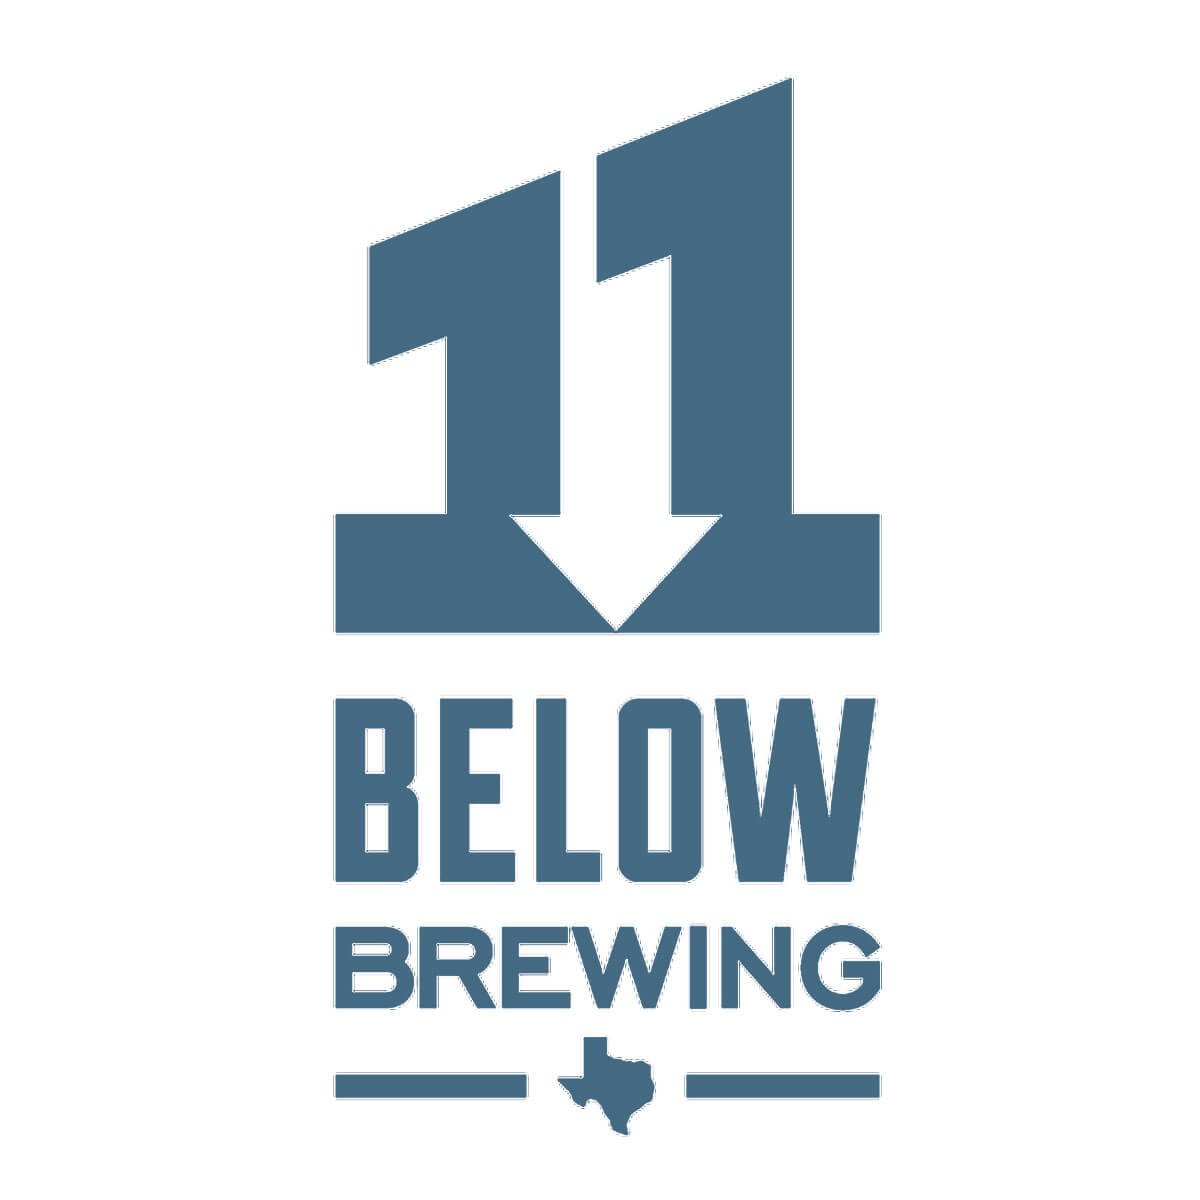 AB-Breweries-11-Below-Brewing-Company-Logo-1.jpg